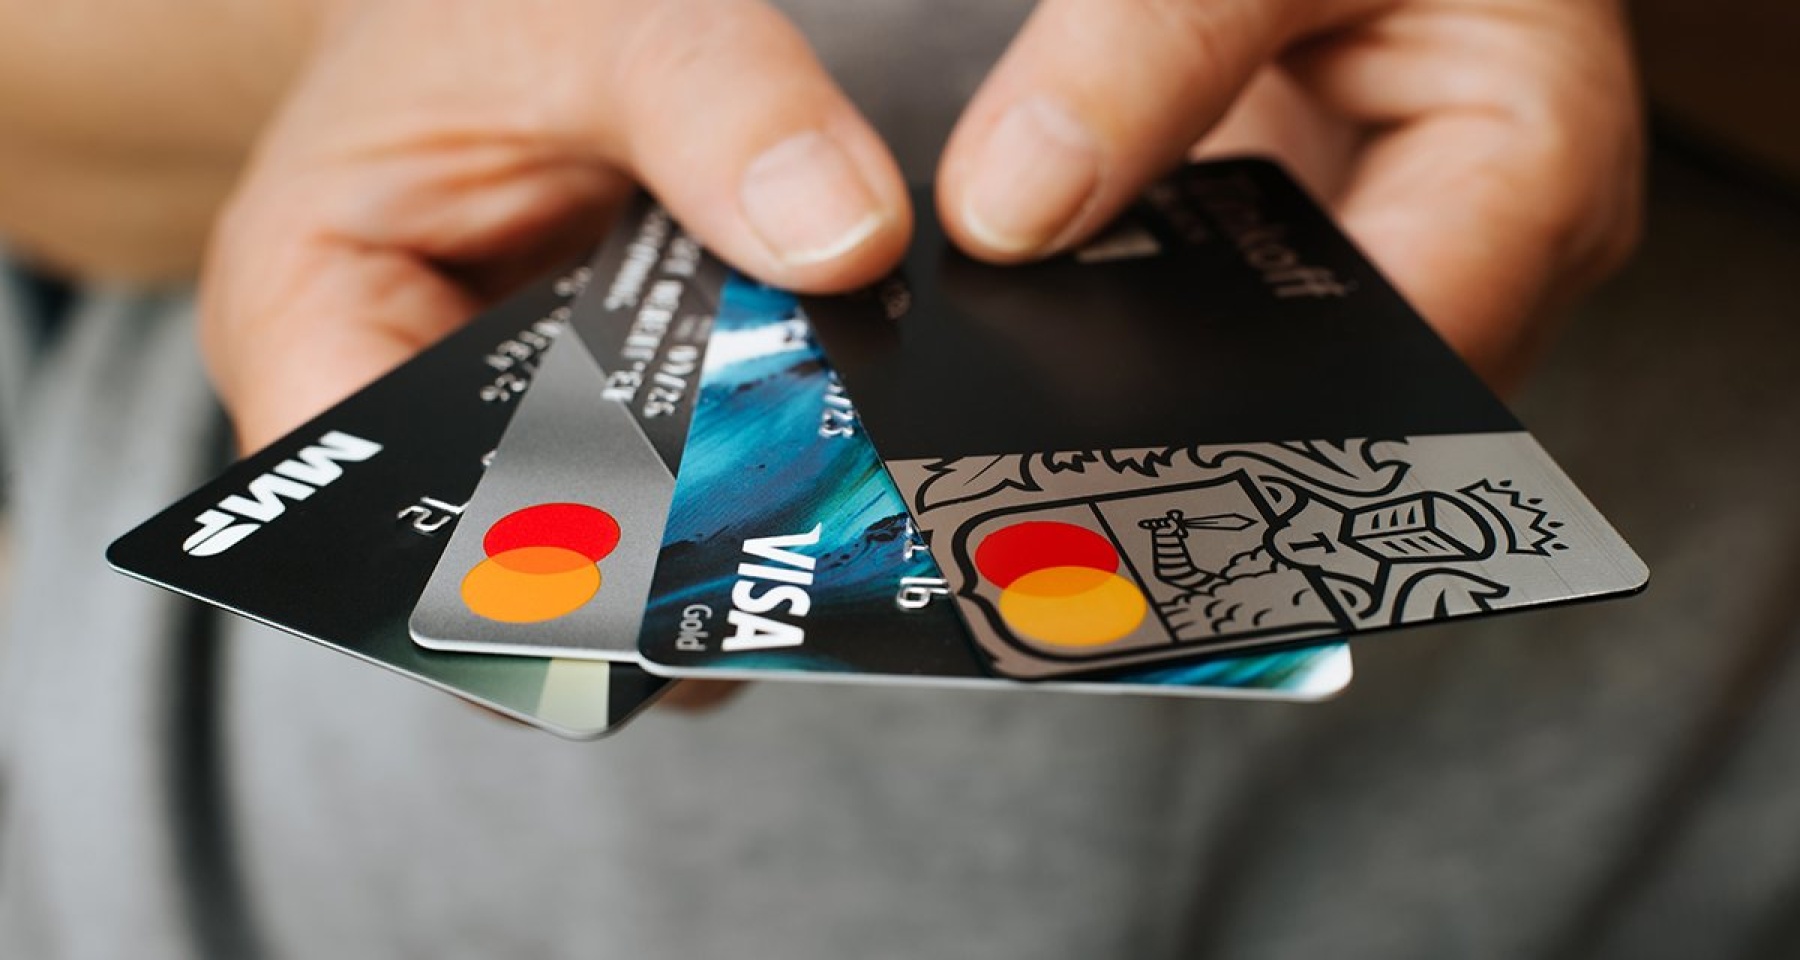 Альтернатива кредитам. Аналитик объяснила рост востребованности кредитных карт 